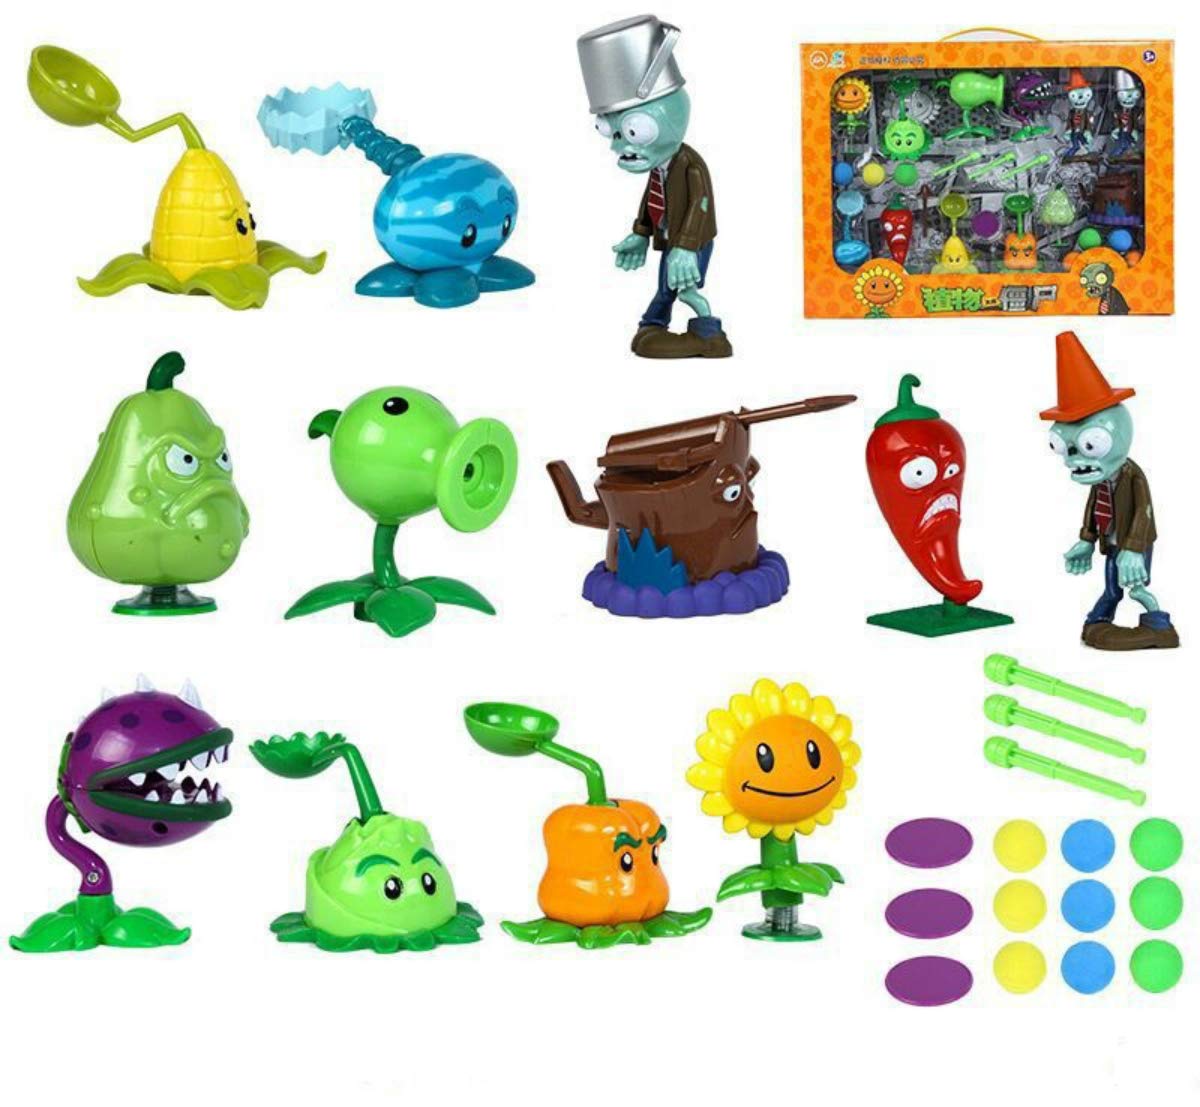 heya 2018 New Toys Popular Games PVZ Plants Vs Zombies Peashooter Plastic Action Figures Model Toys Mini Plants Vs. Zombies Toys